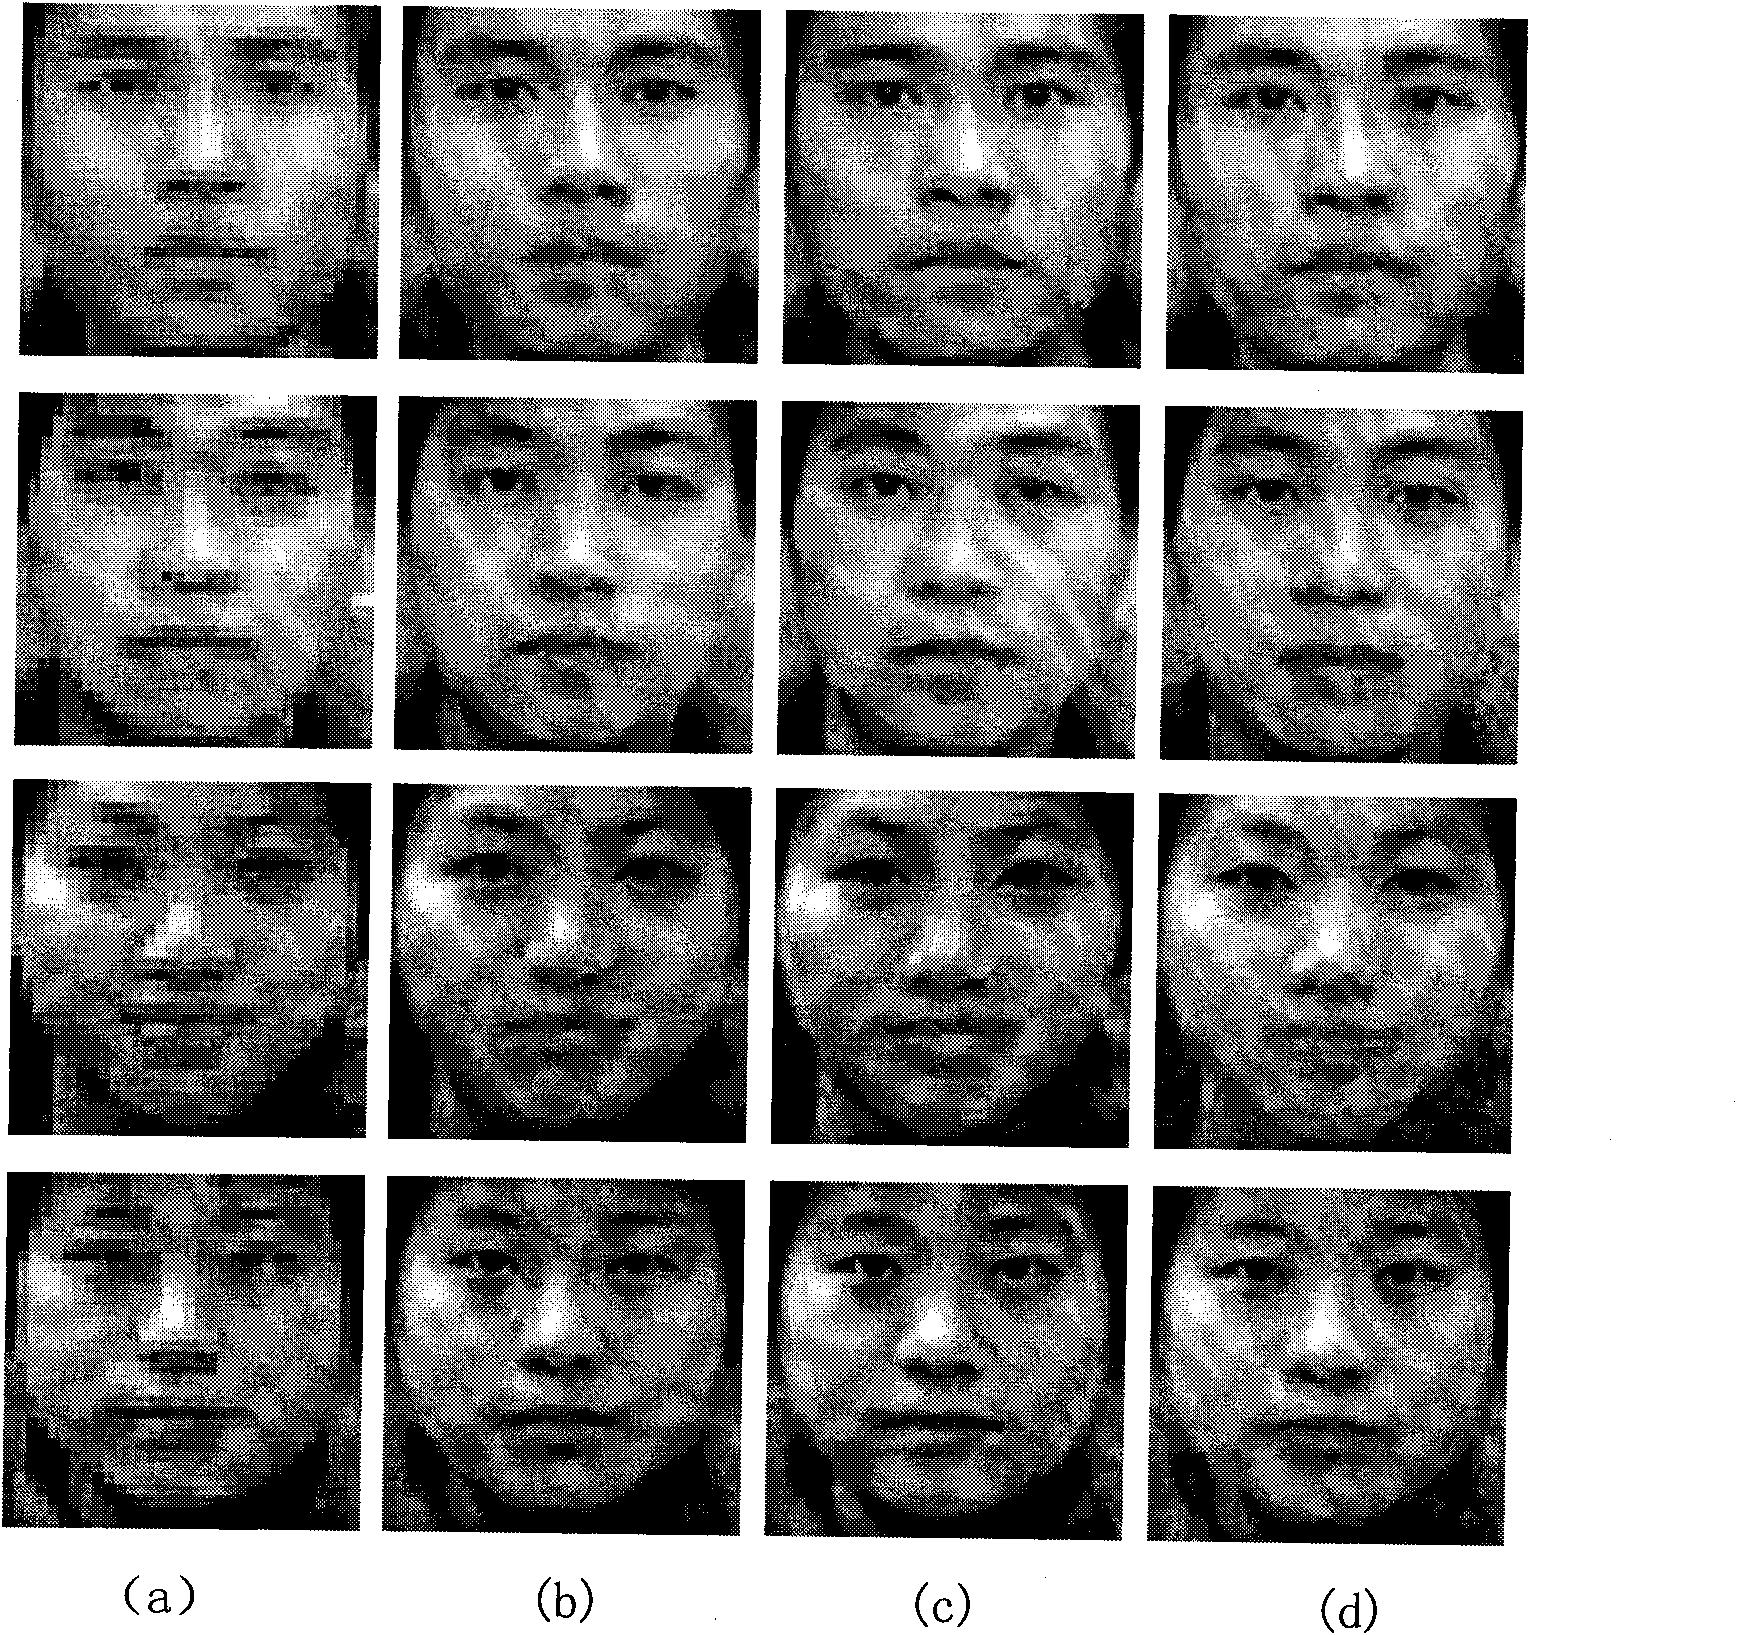 Face image super-resolution reconstructing method based on canonical correlation analysis